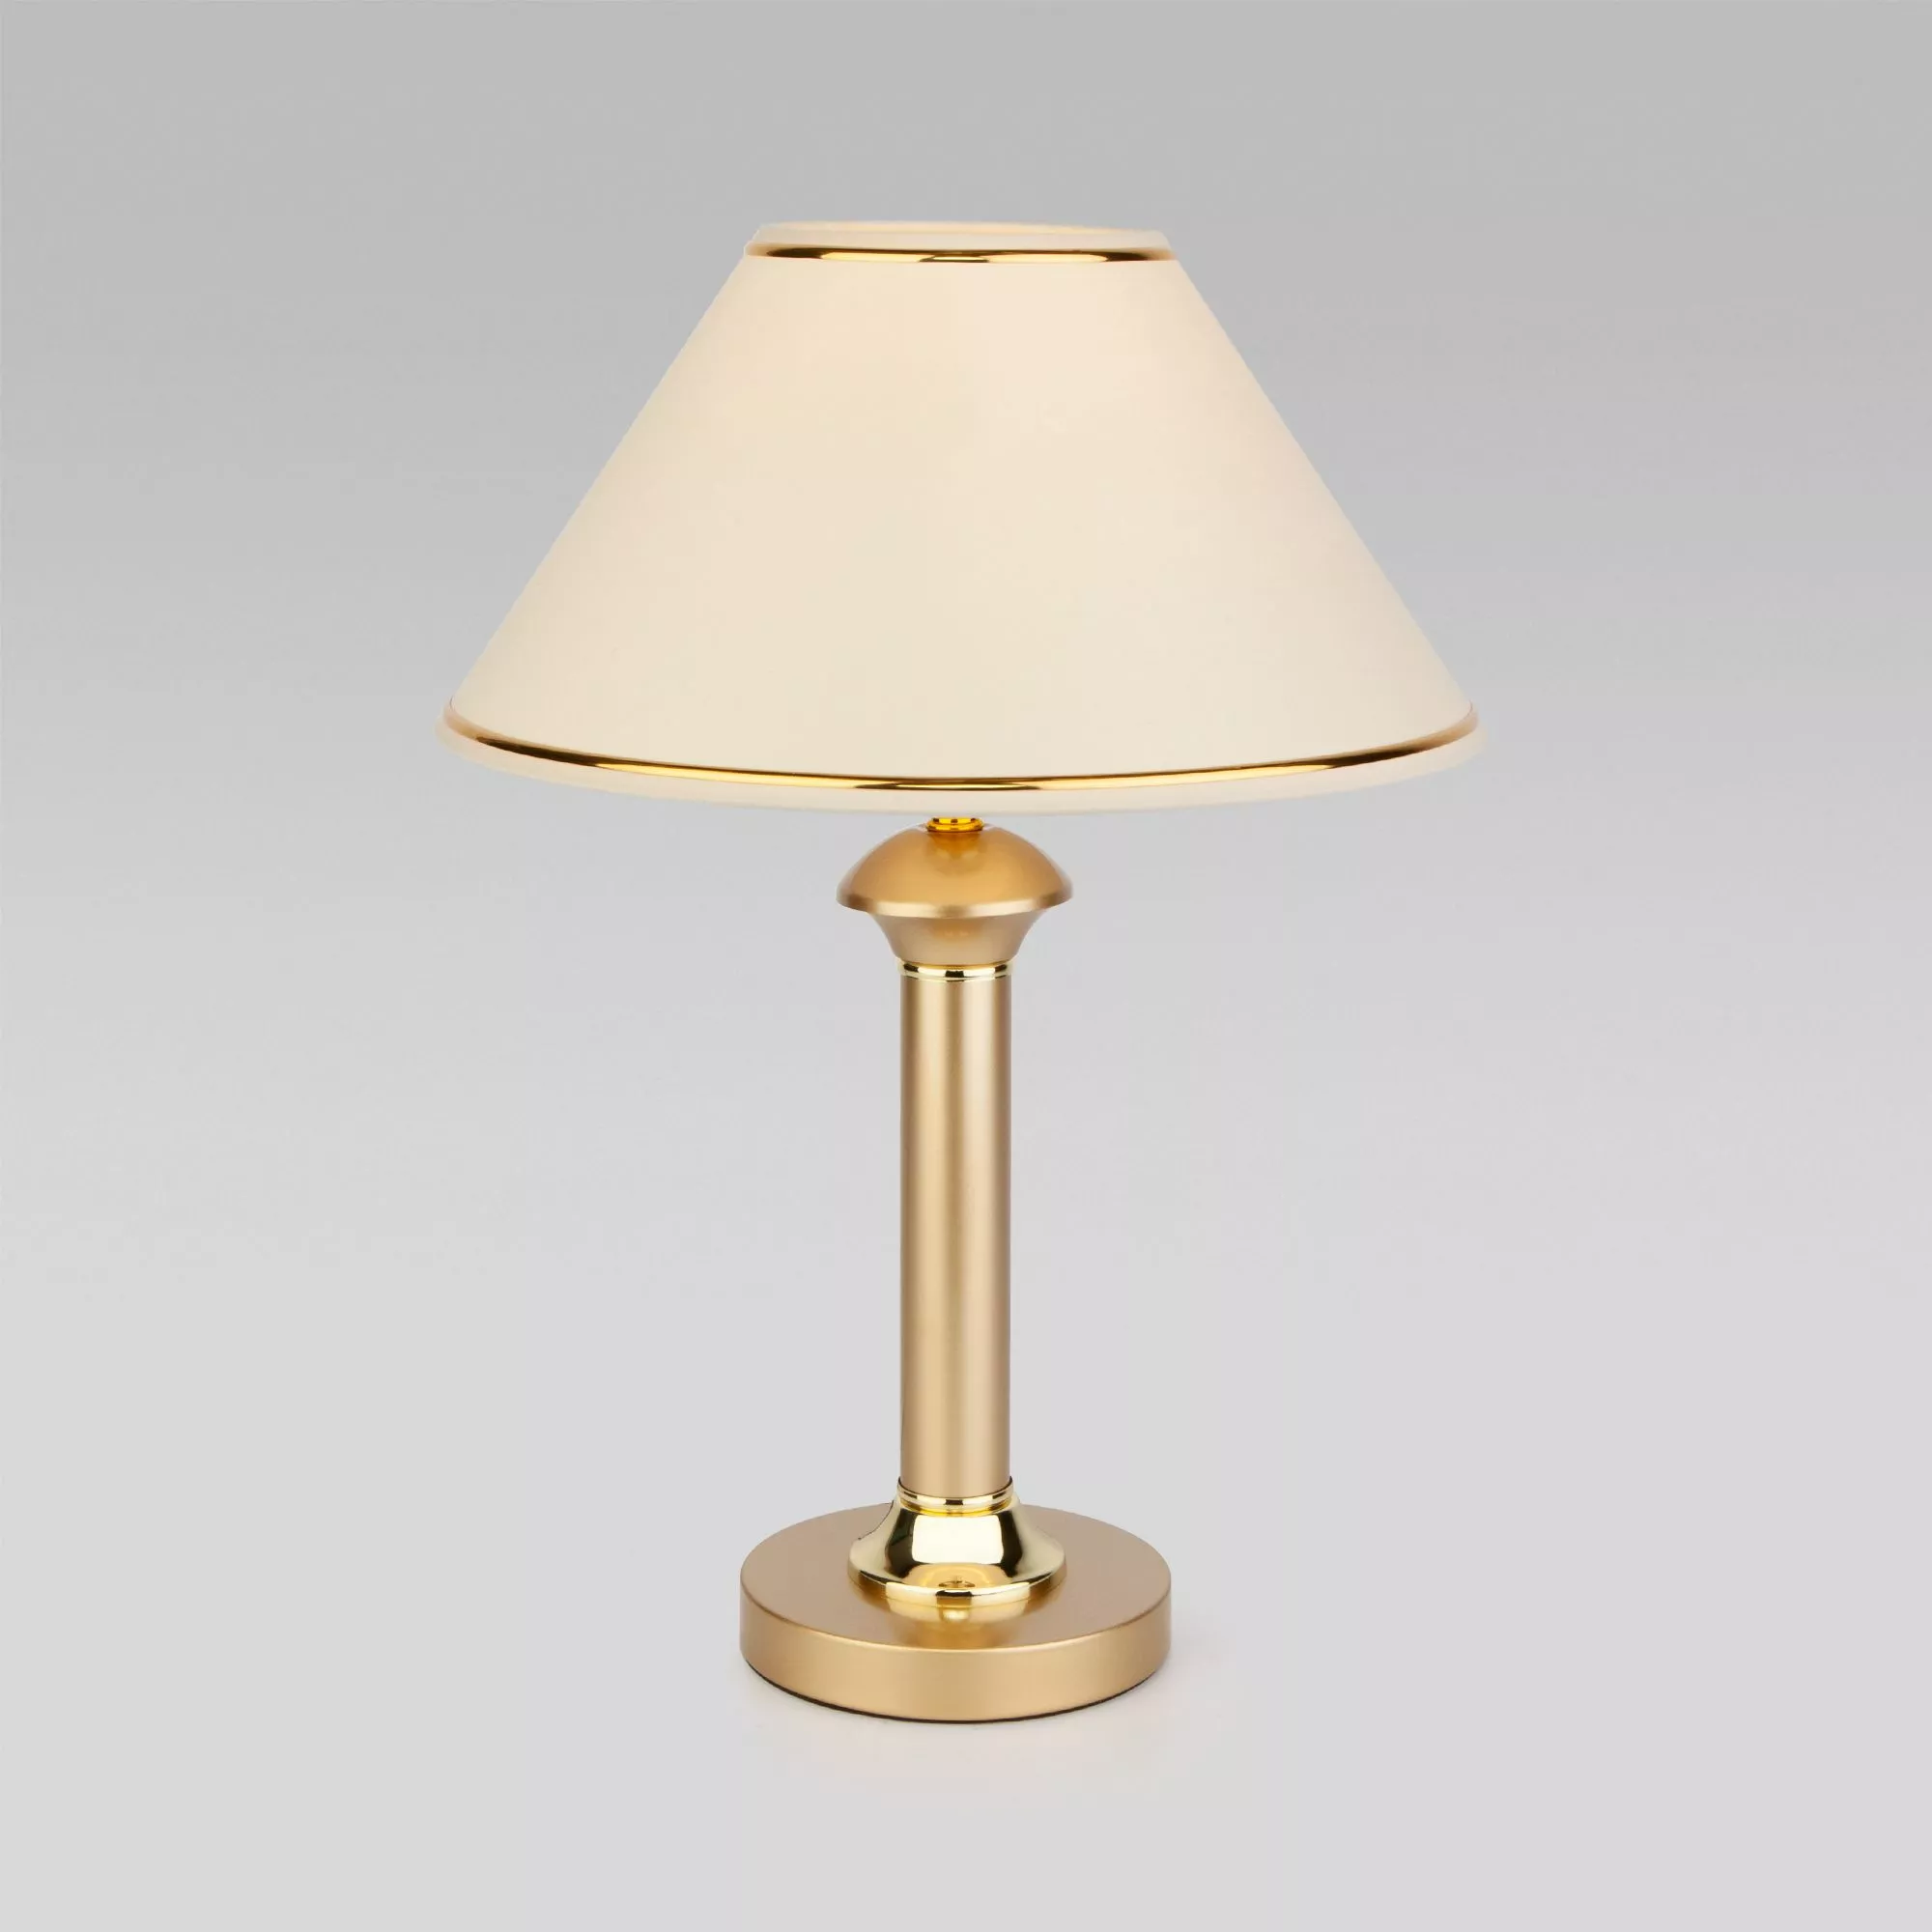 Лампа настольная Eurosvet Lorenzo 60019/1 перламутровое золото